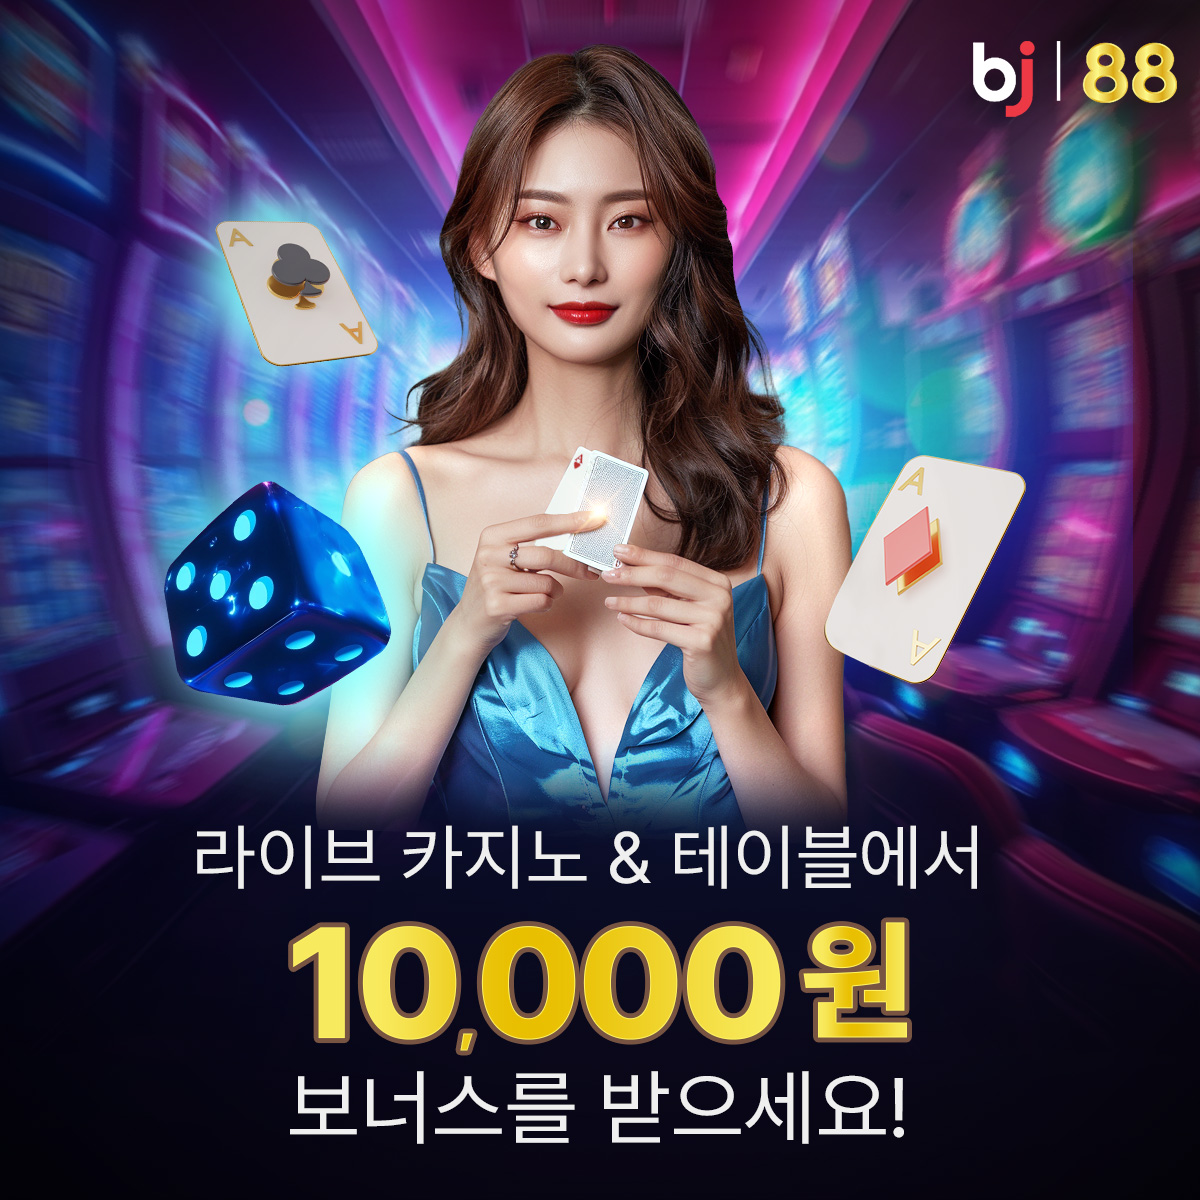 bj88 korea live casino promotion